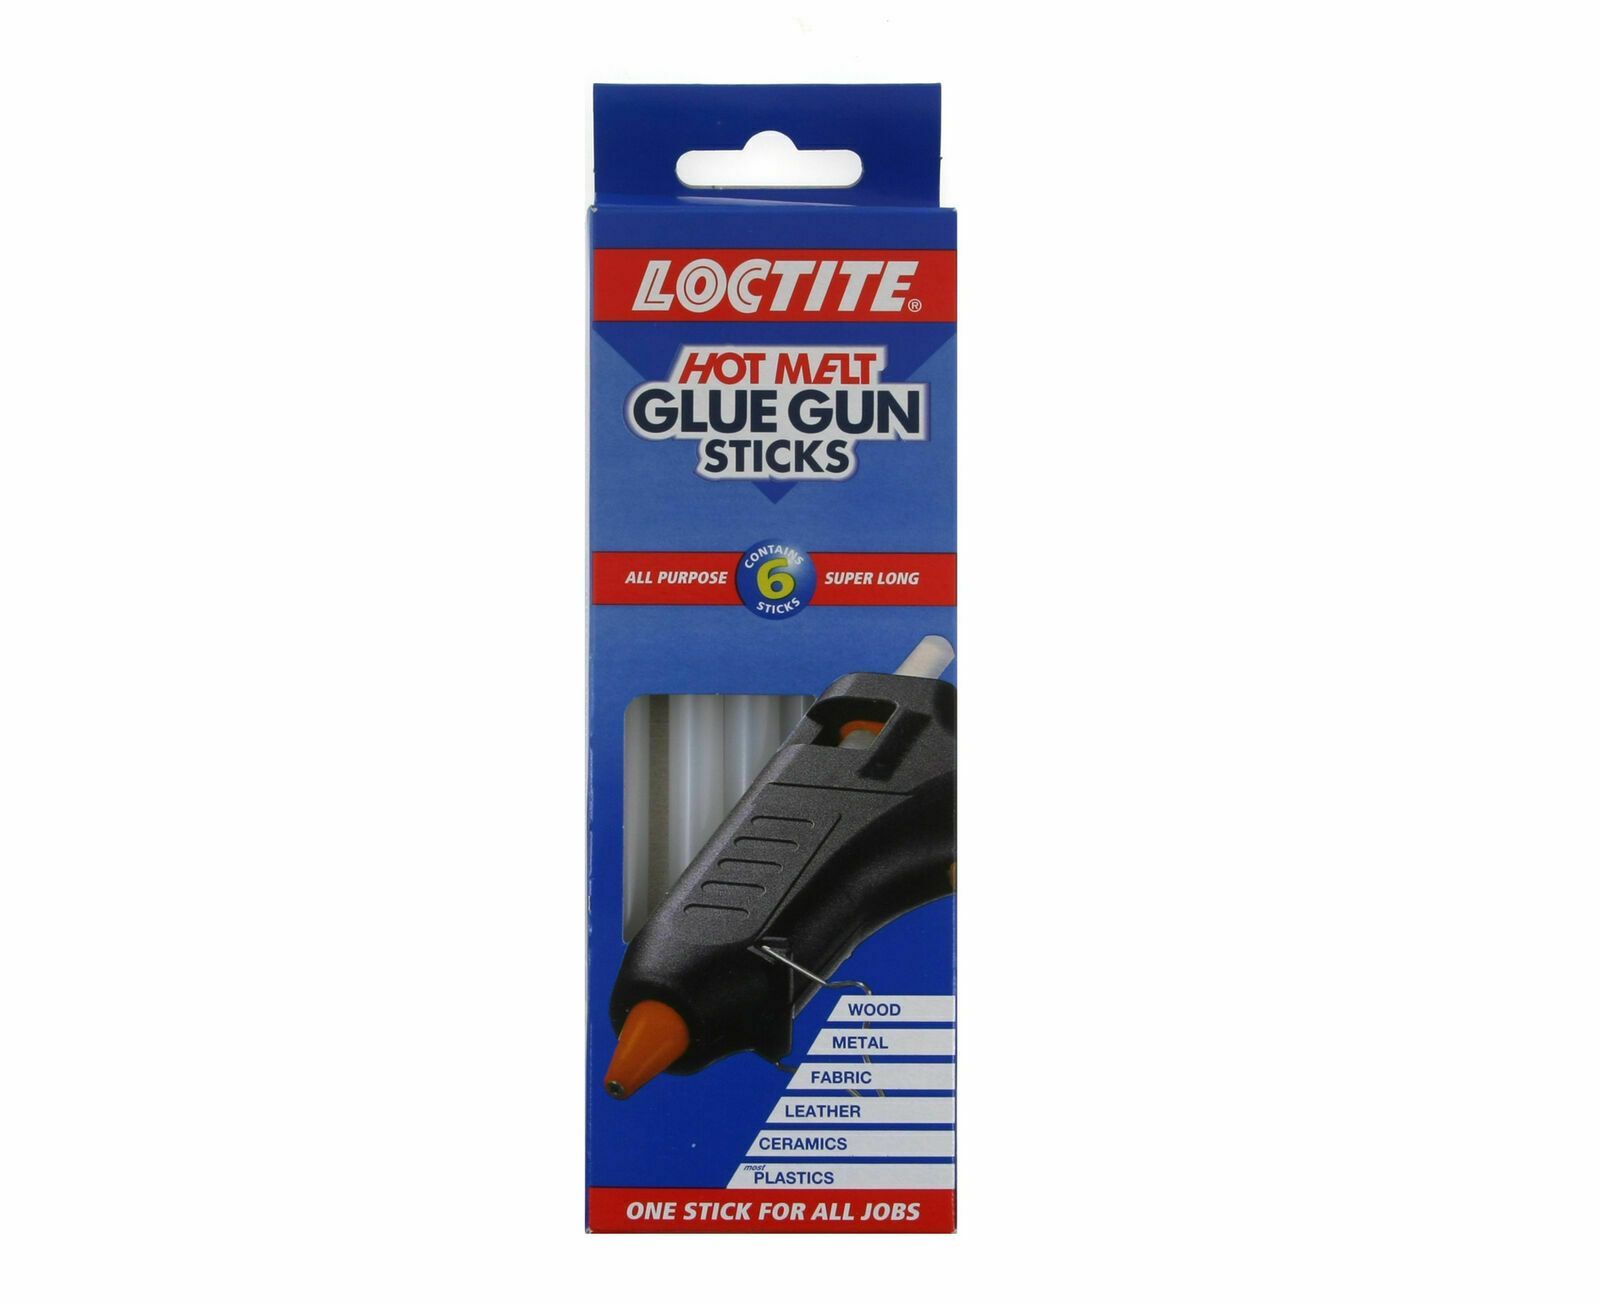 Loctite Hot Melt Glue Gun Sticks (Pack of 6)